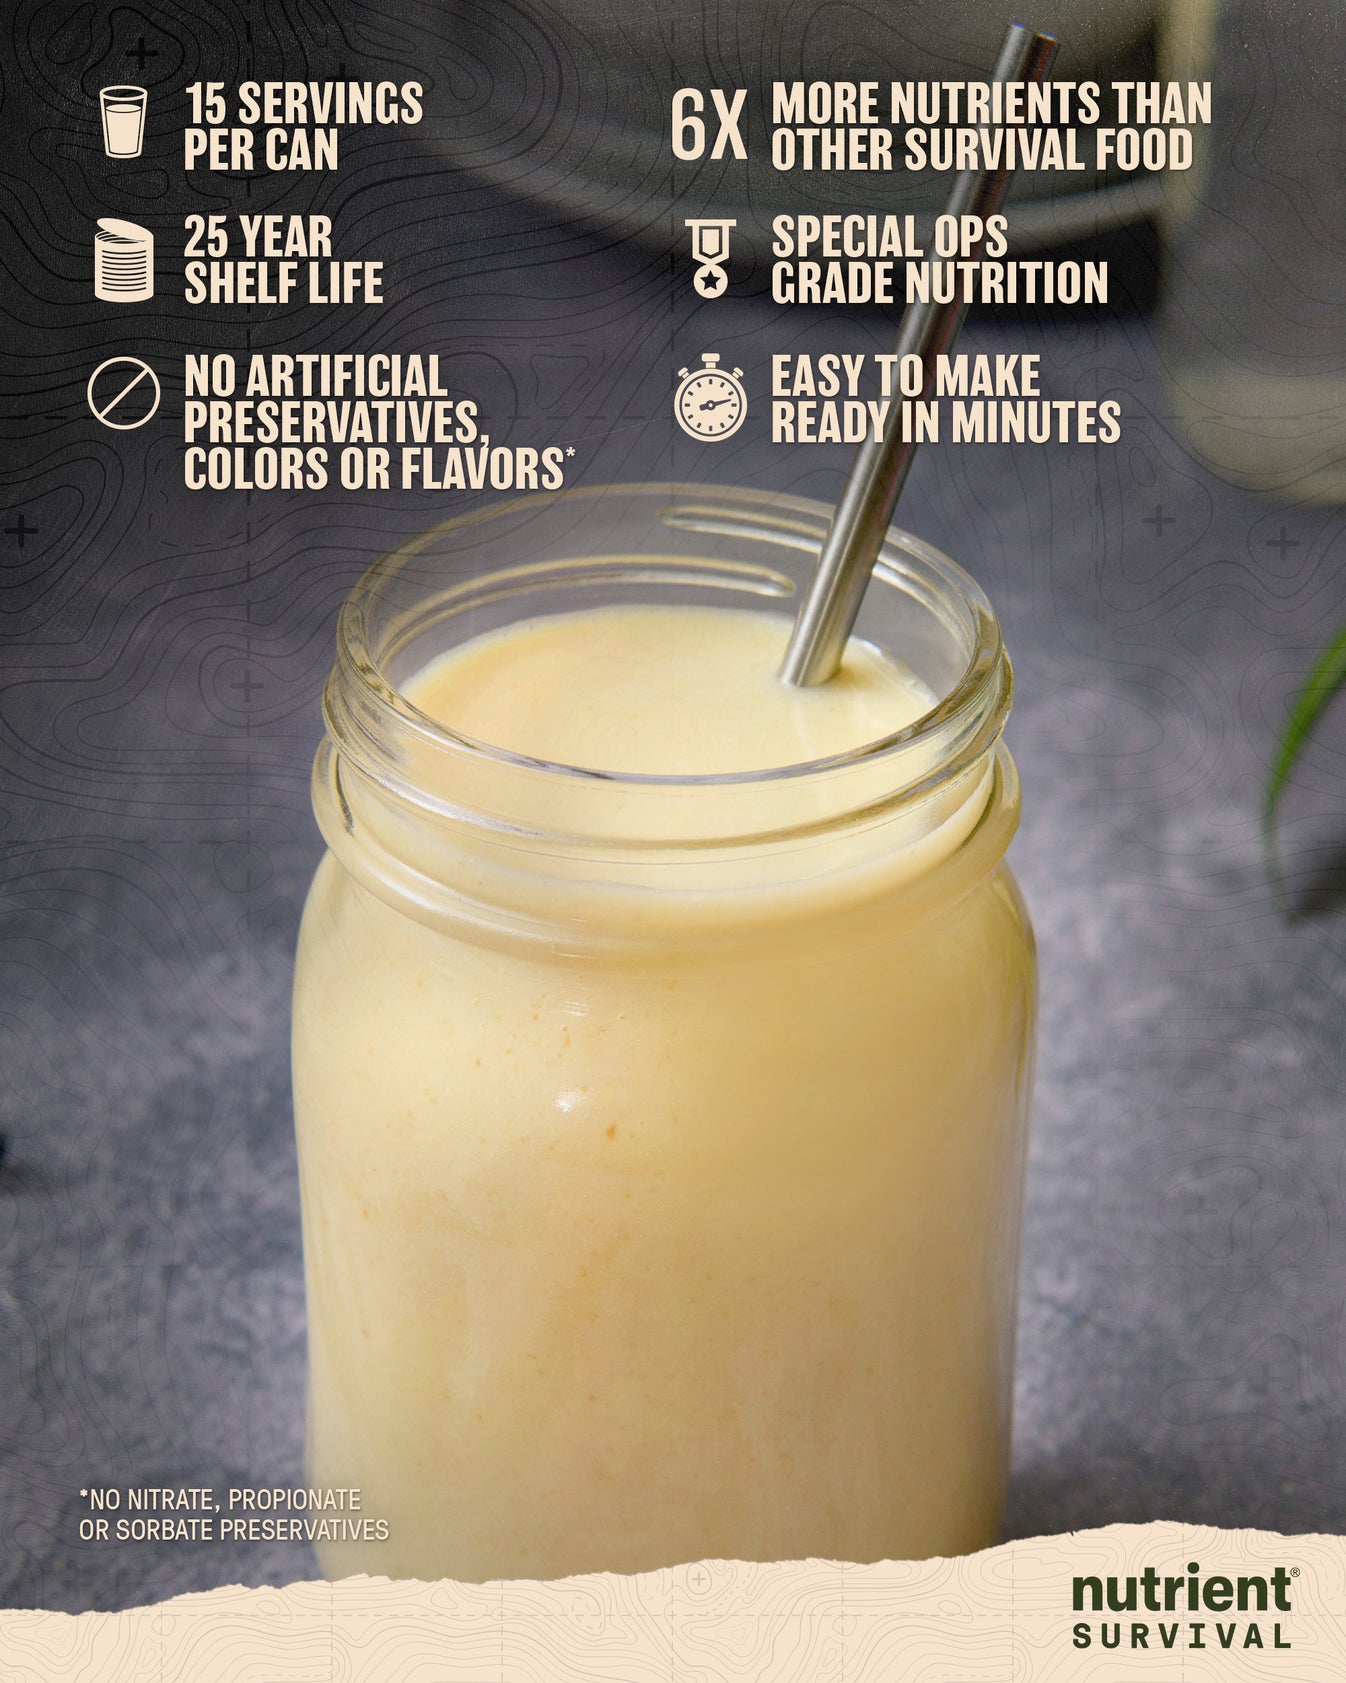 Creamy Vanilla Shake #10 Can